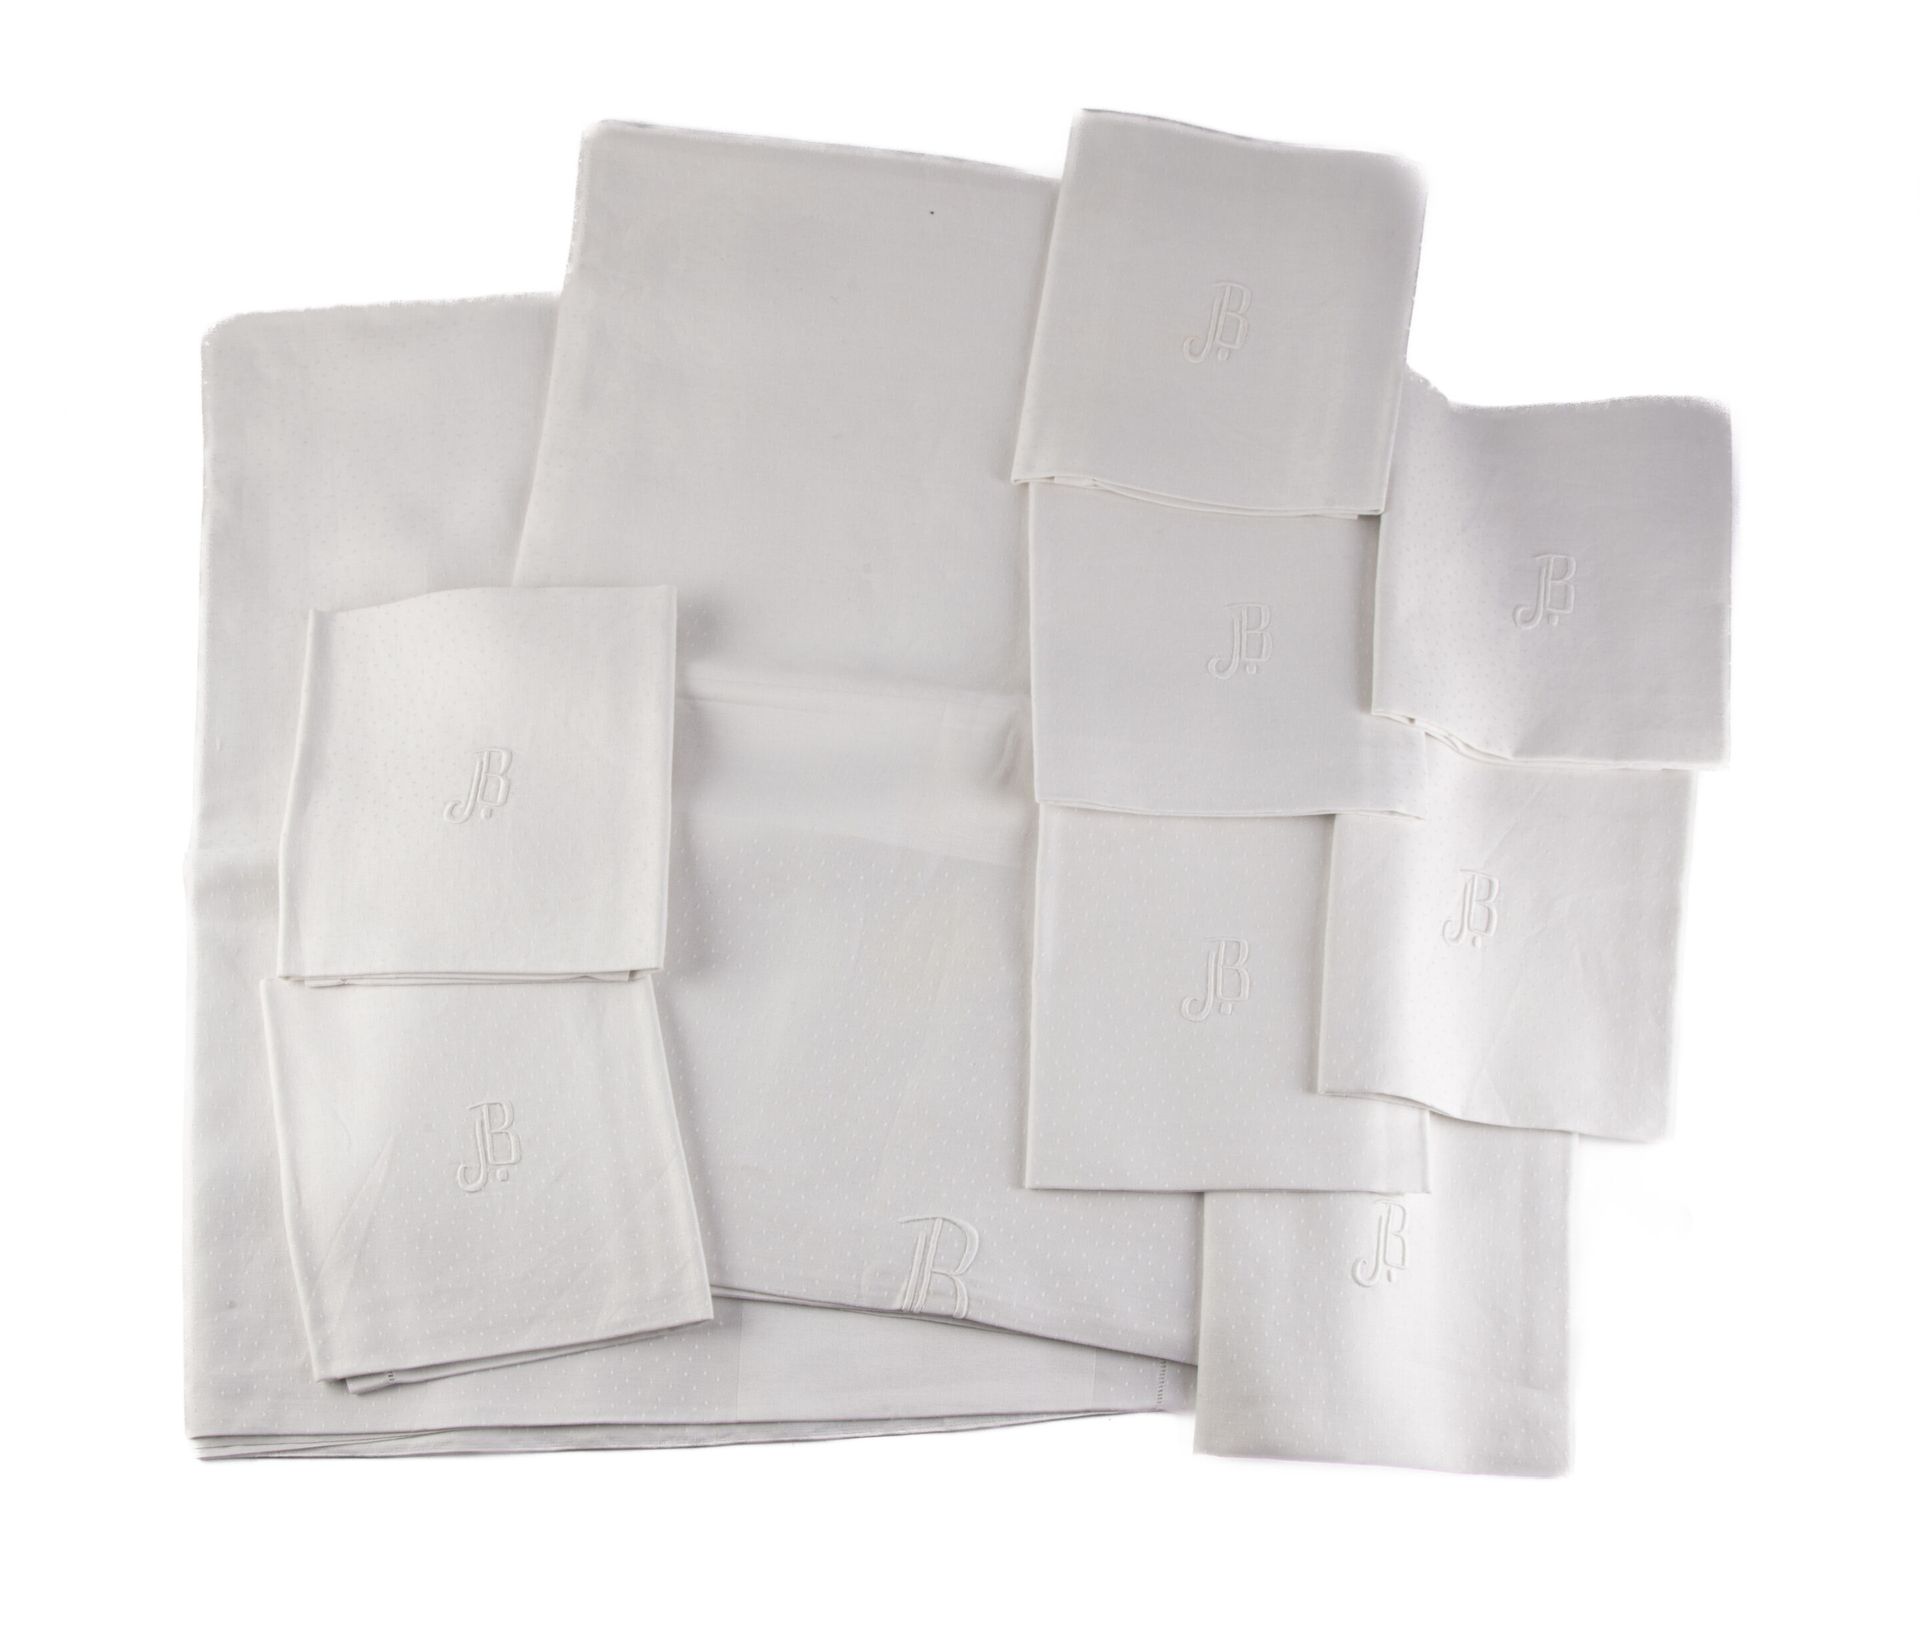 Null 一块桌布和8张绣有 "JB "首字母的棉质餐巾纸 
桌布的尺寸：240 x 230厘米左右
餐巾纸的尺寸：49 x 55厘米左右。